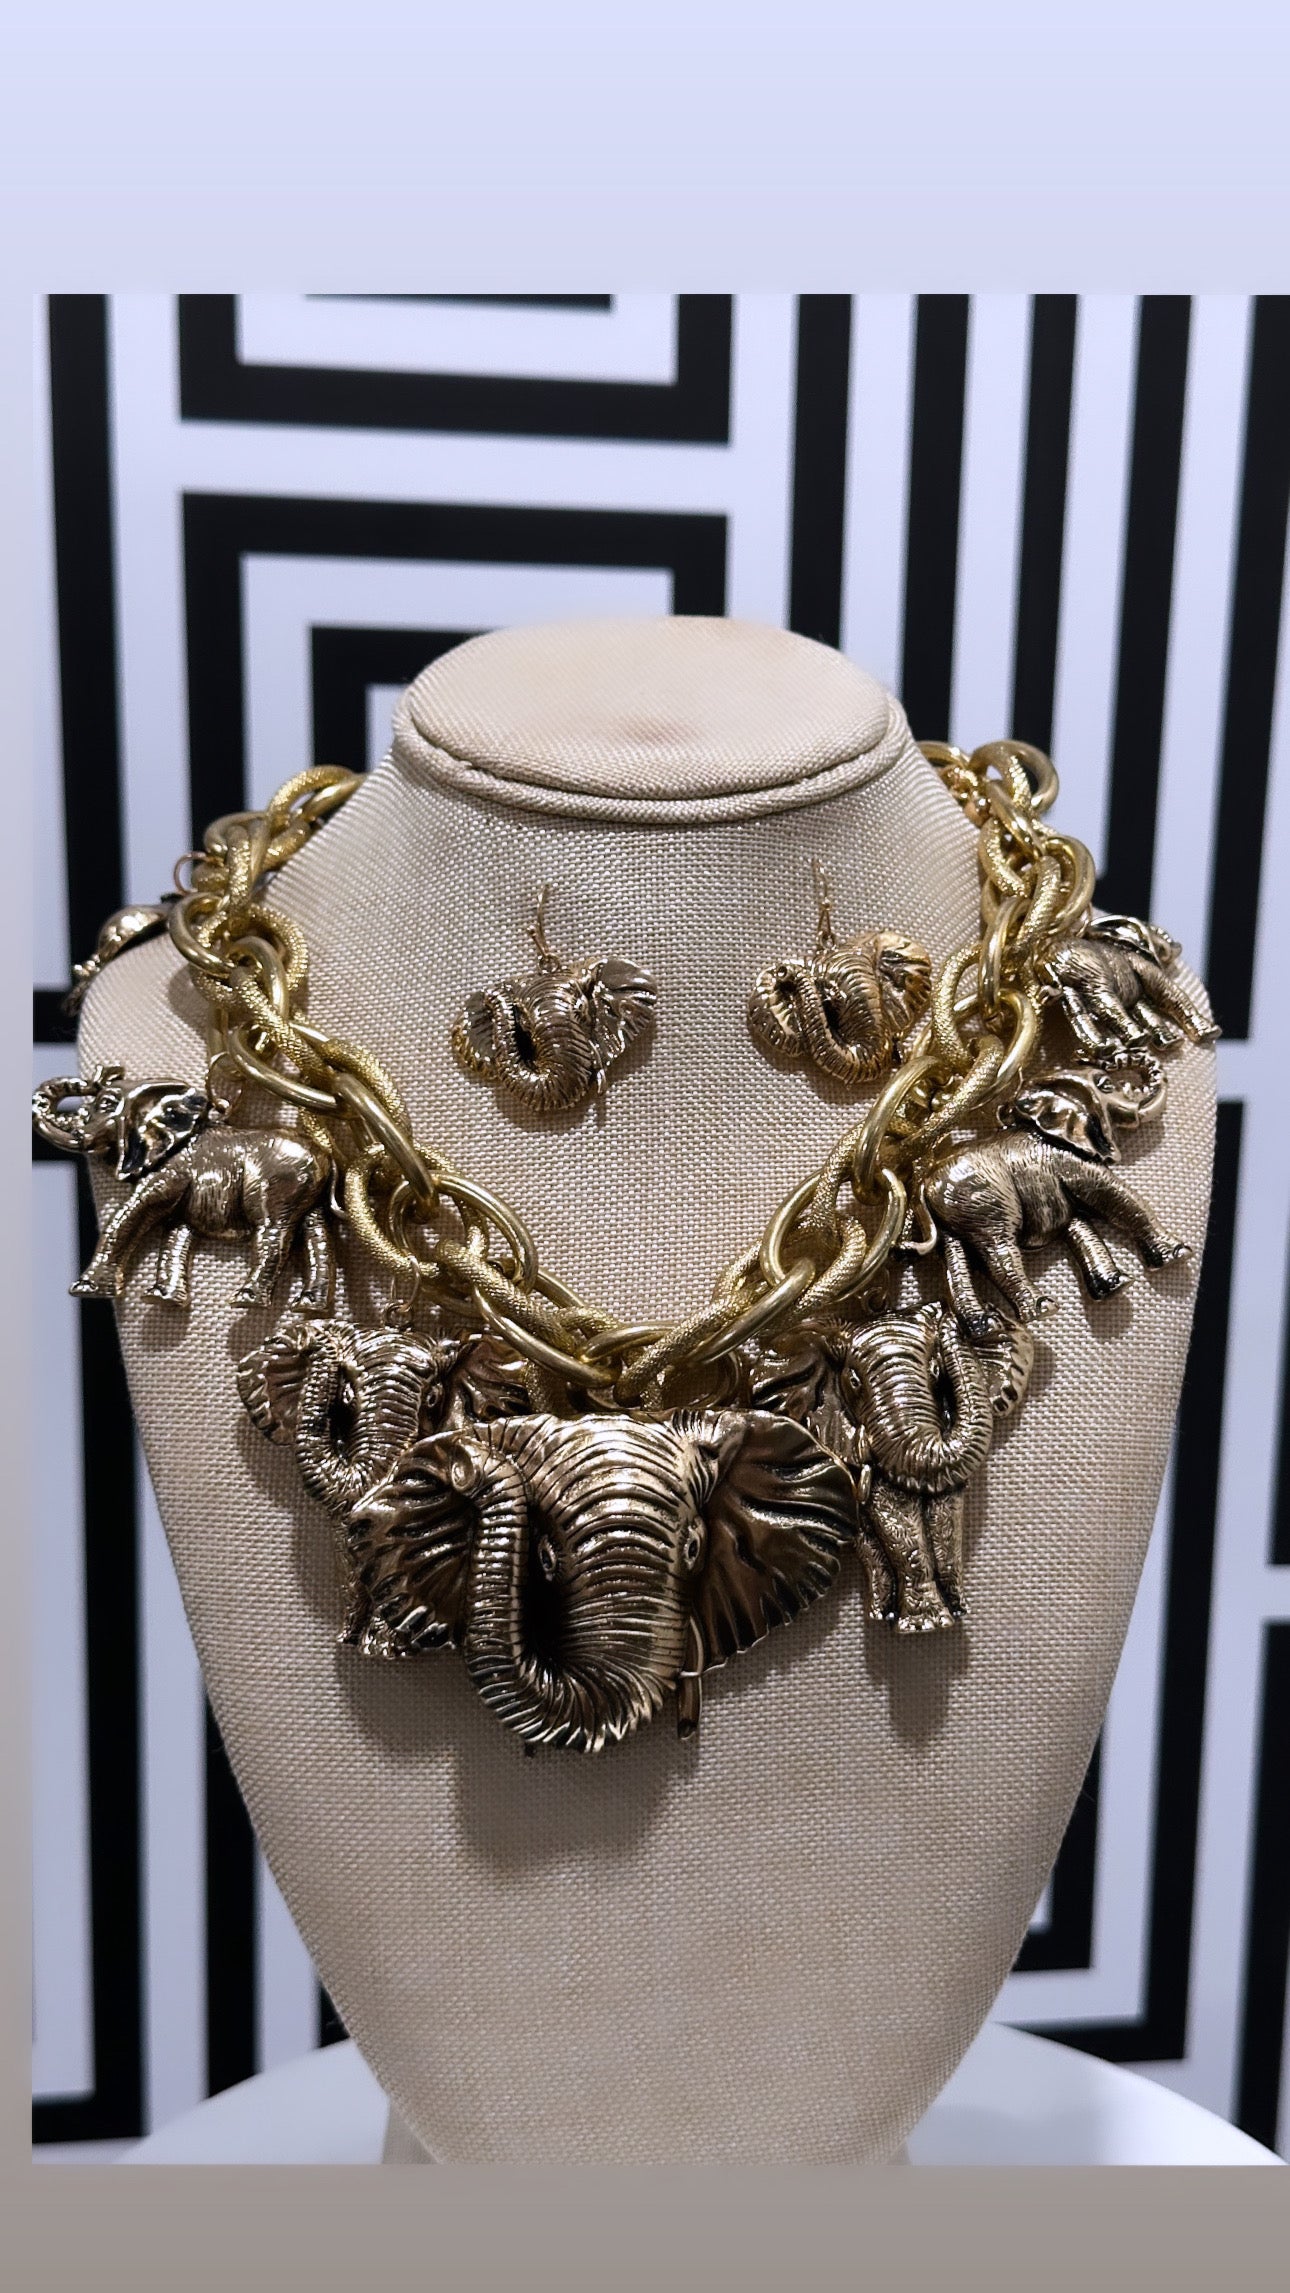 Osuno Elephant Charm Necklace and Earrings set